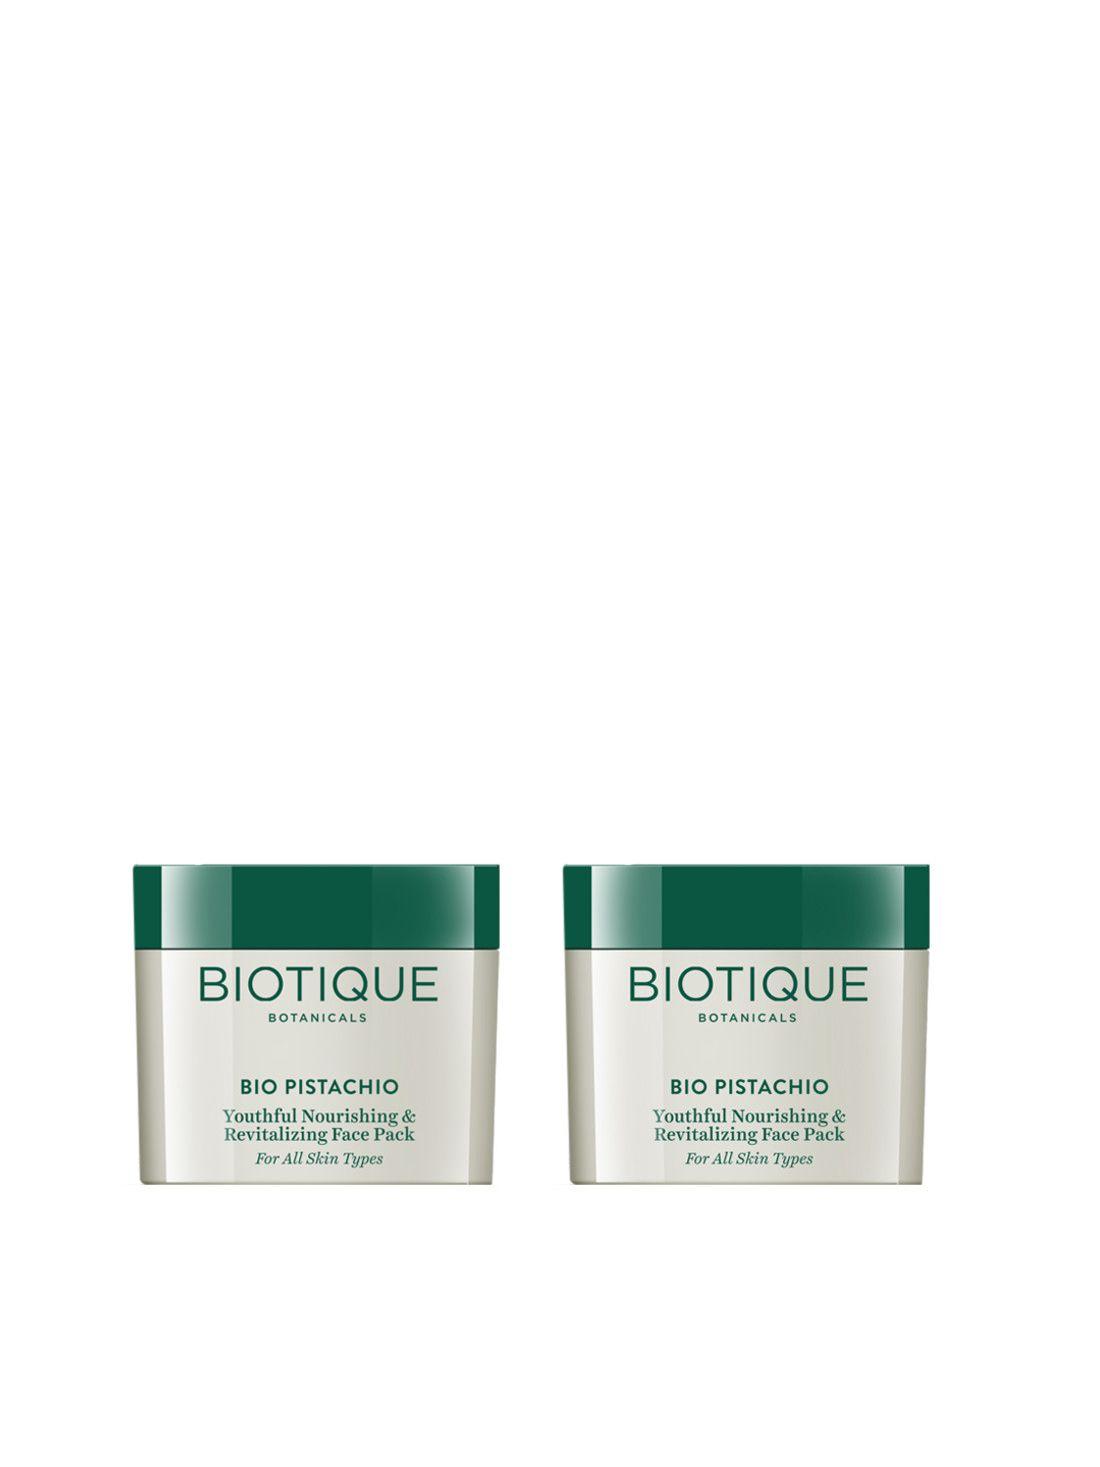 biotique set of 2 bio pistachio youthful nourishing & revitalizing face packs